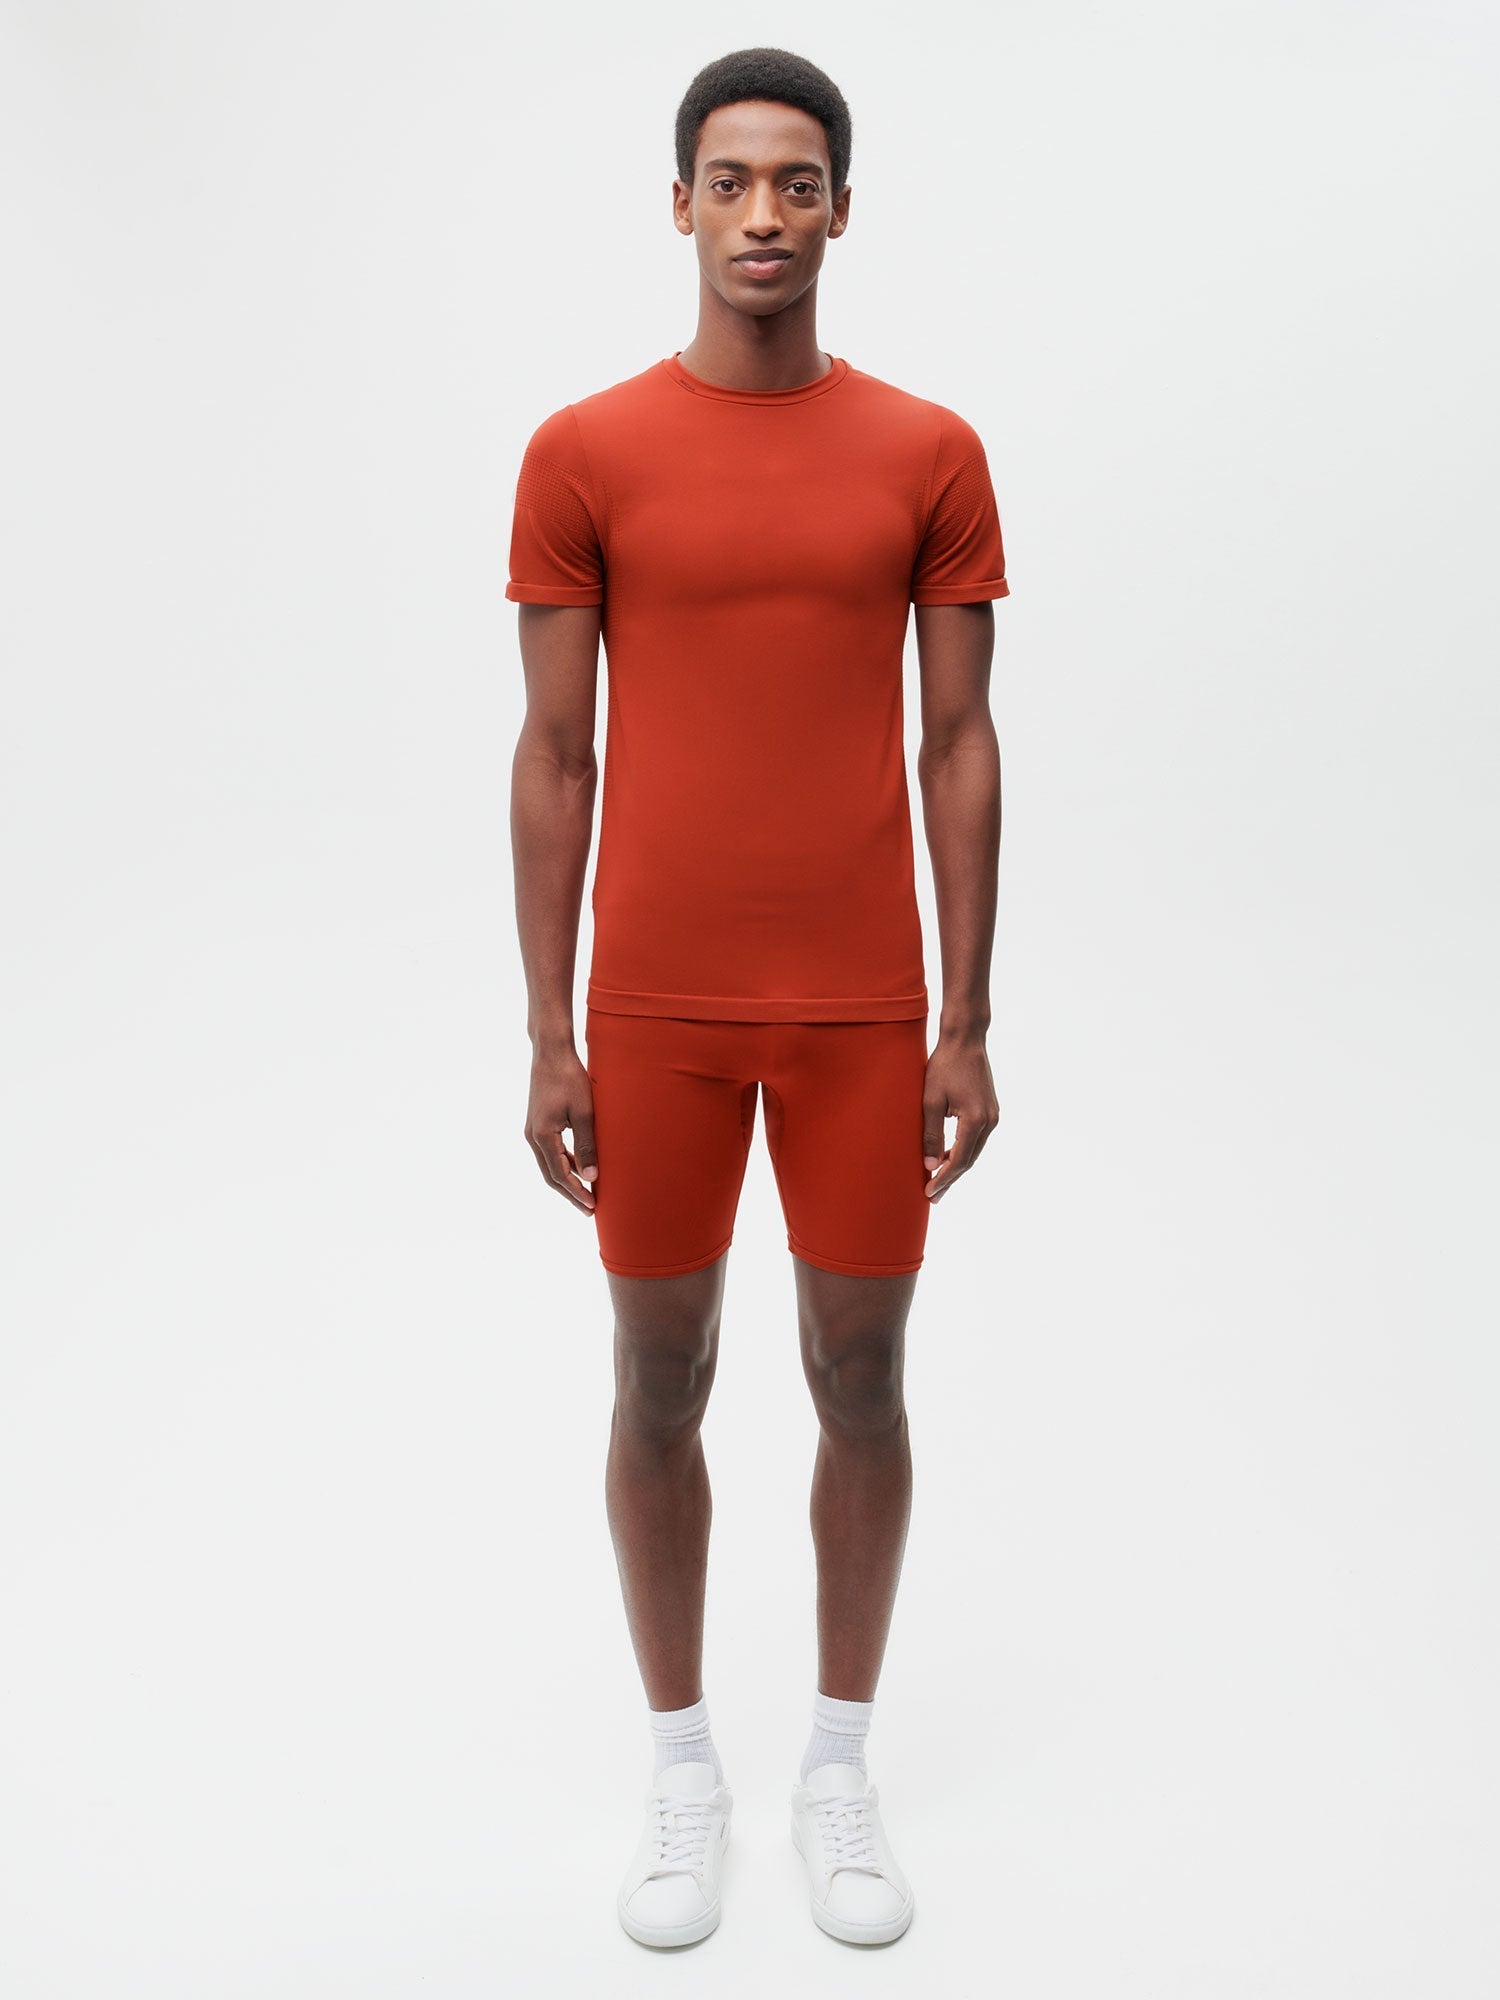 Activewear Mens Shorts Jasper Red 